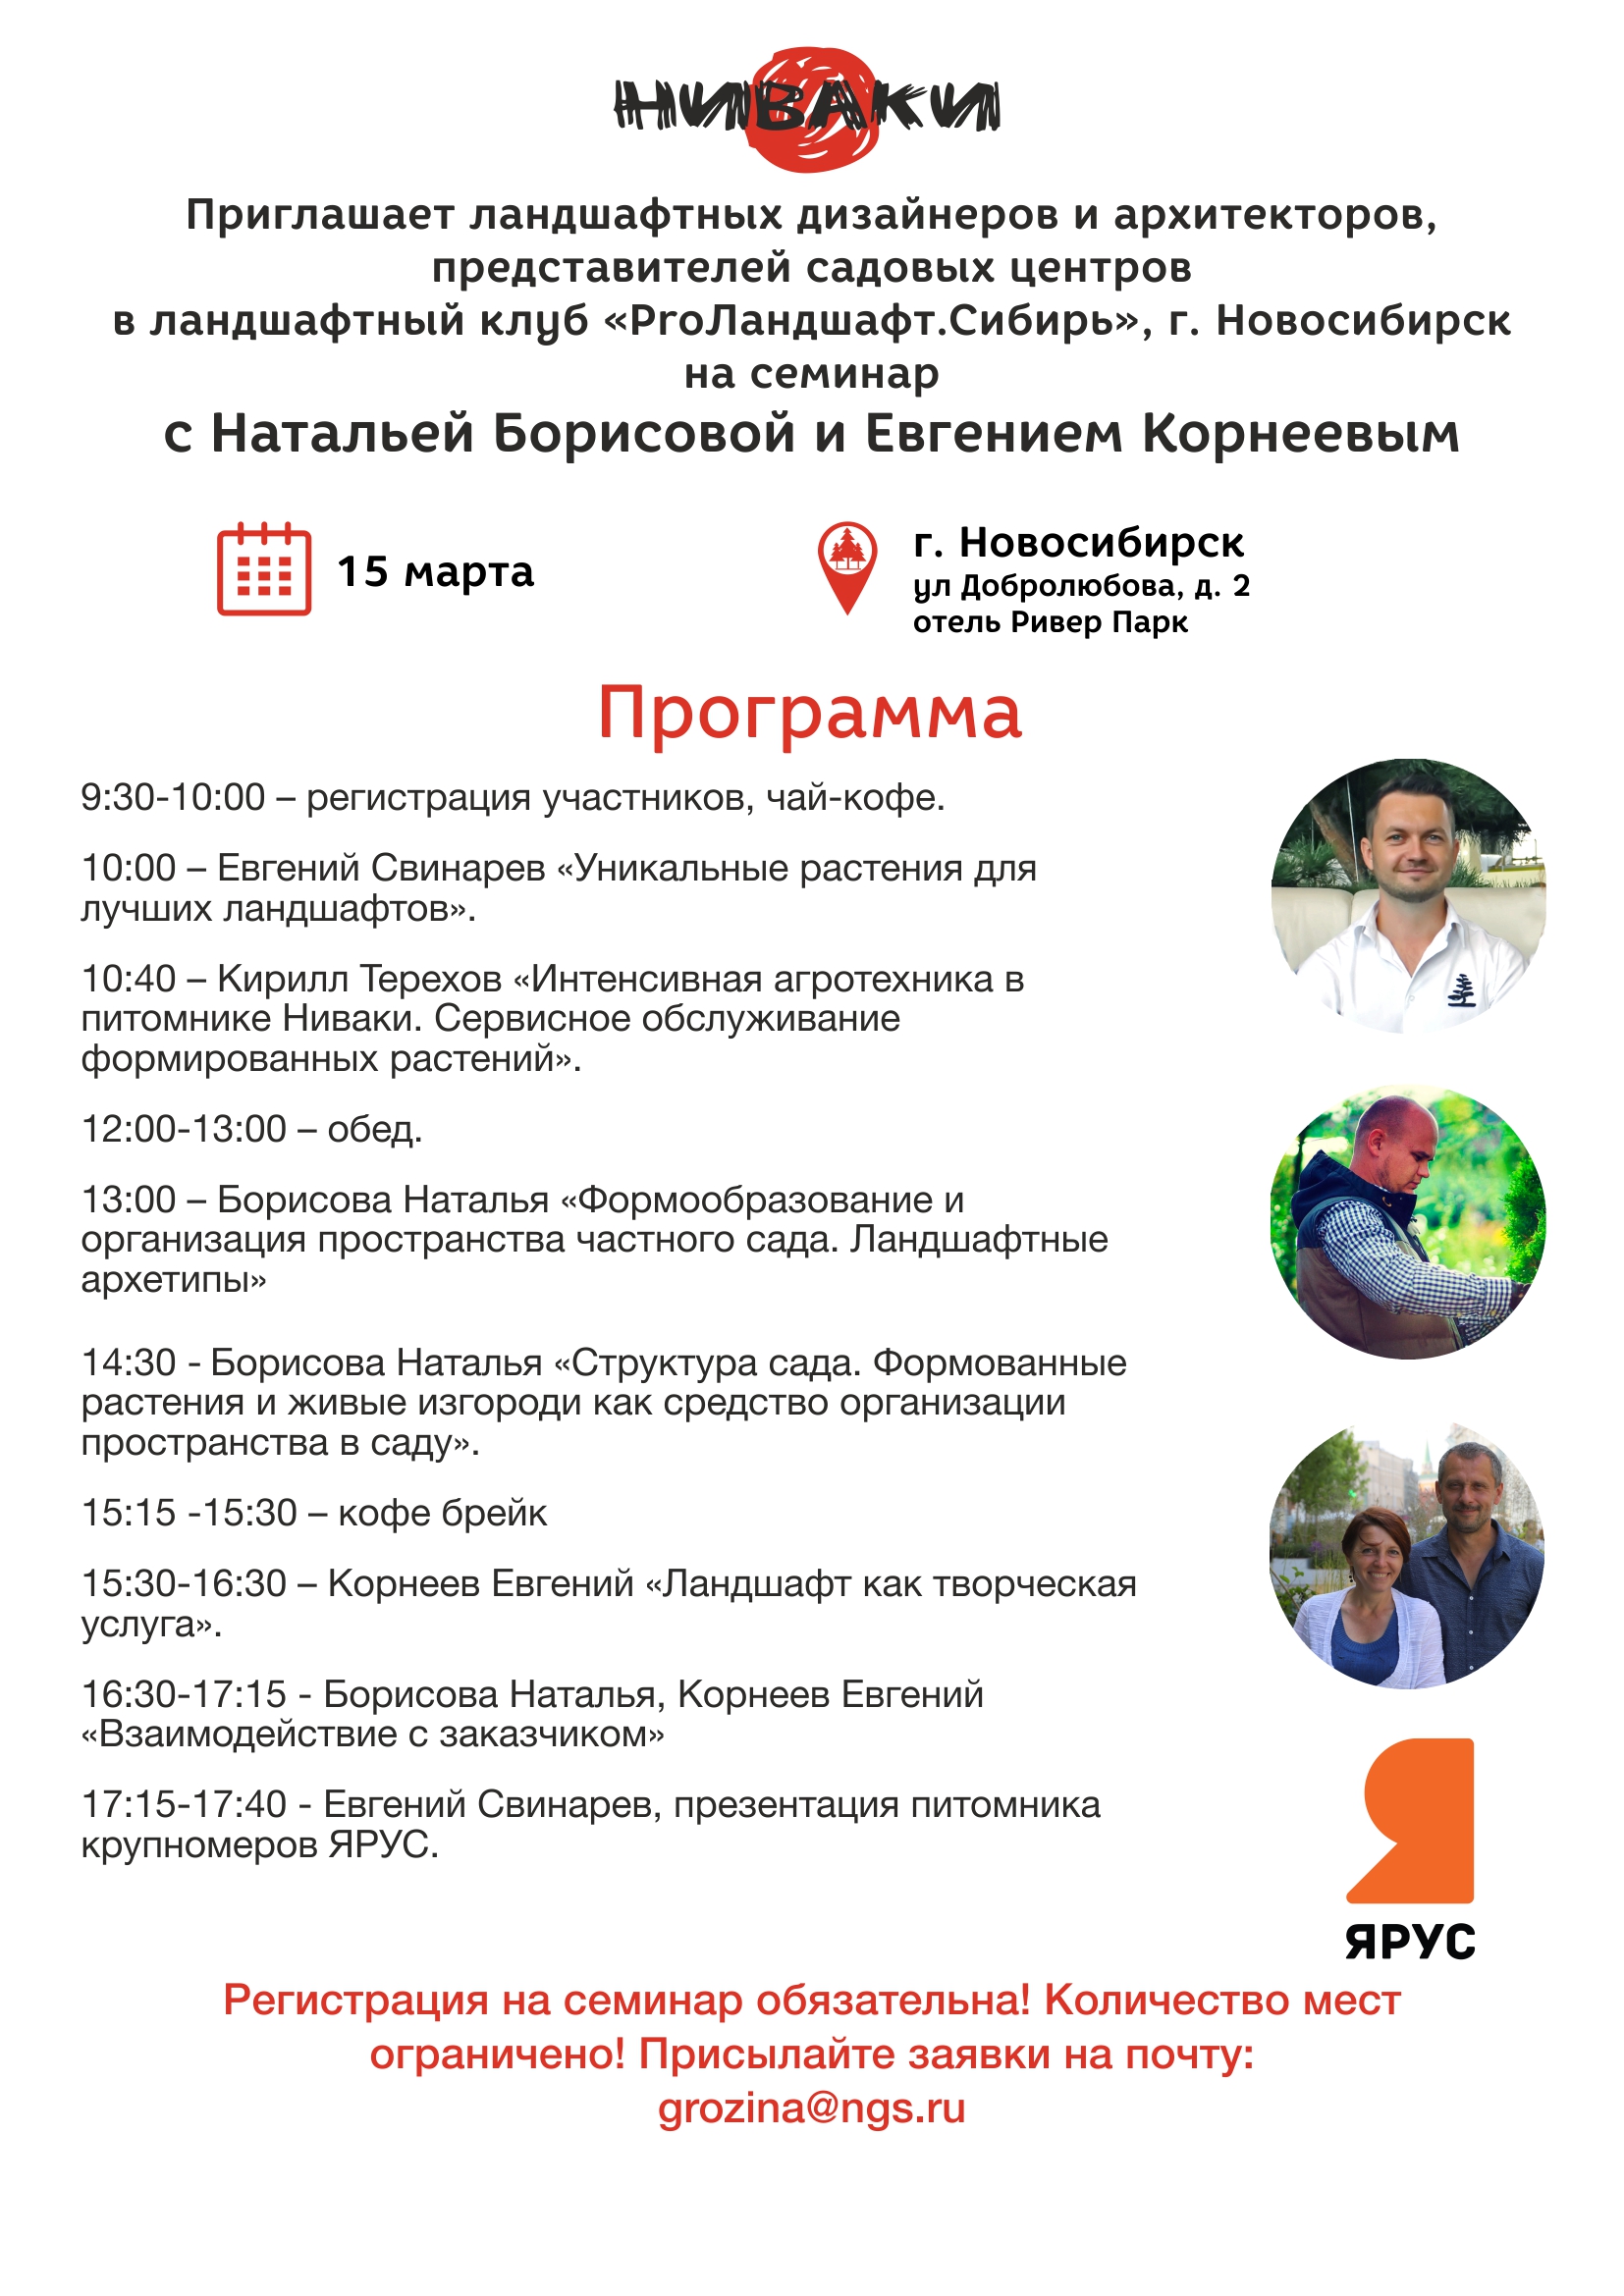 Приглашаем на семинар в Новосибирске 15 марта